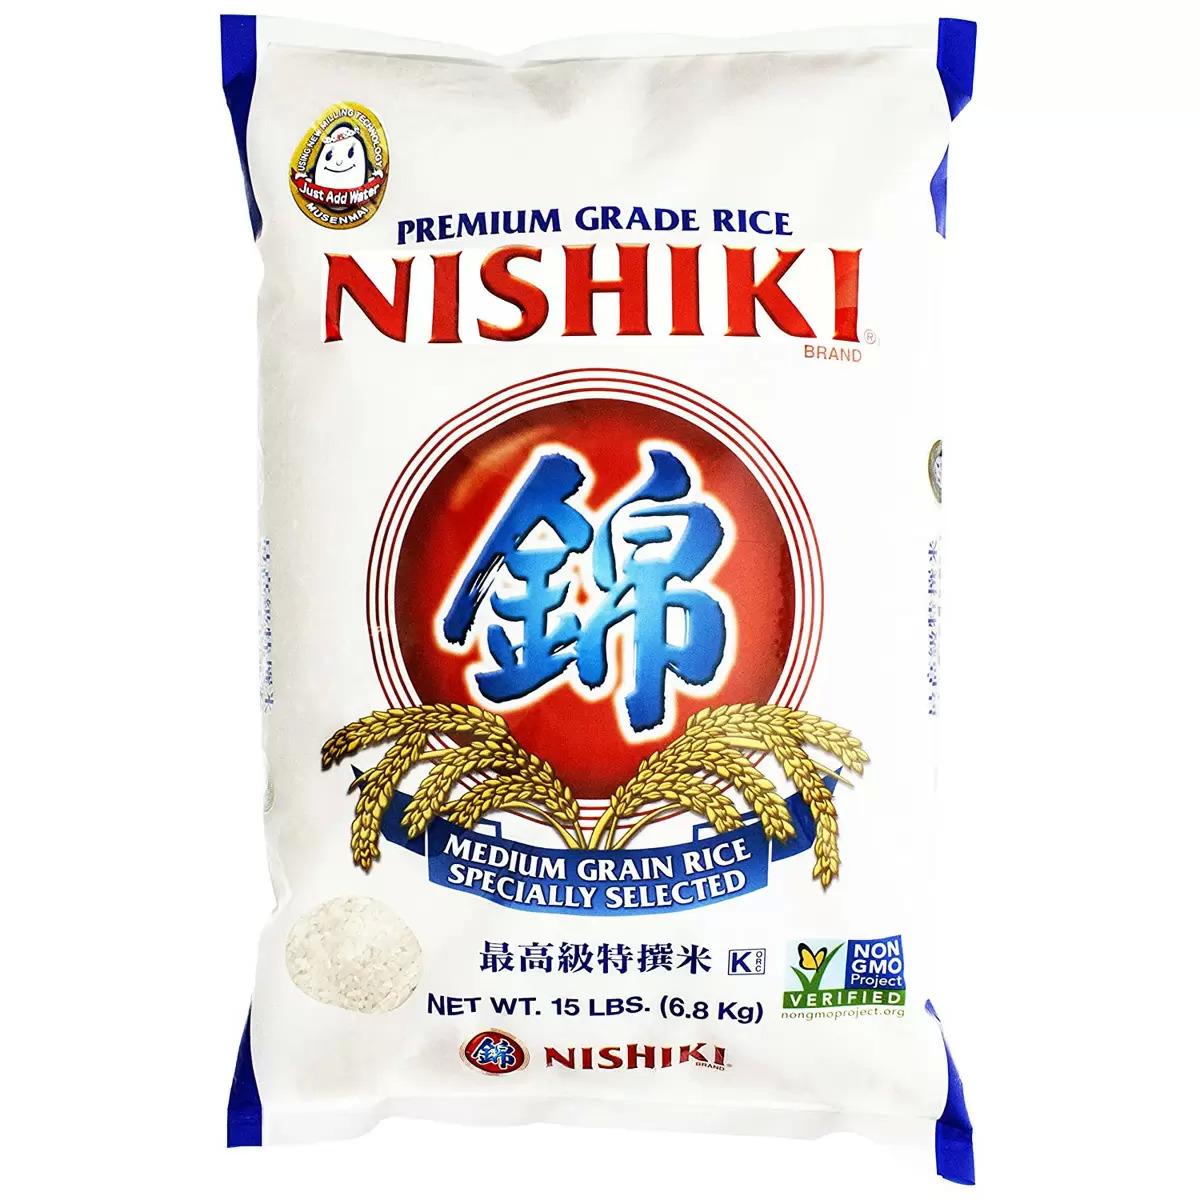 Nishiki Premium Medium Grain Rice for $12.03 Shipped